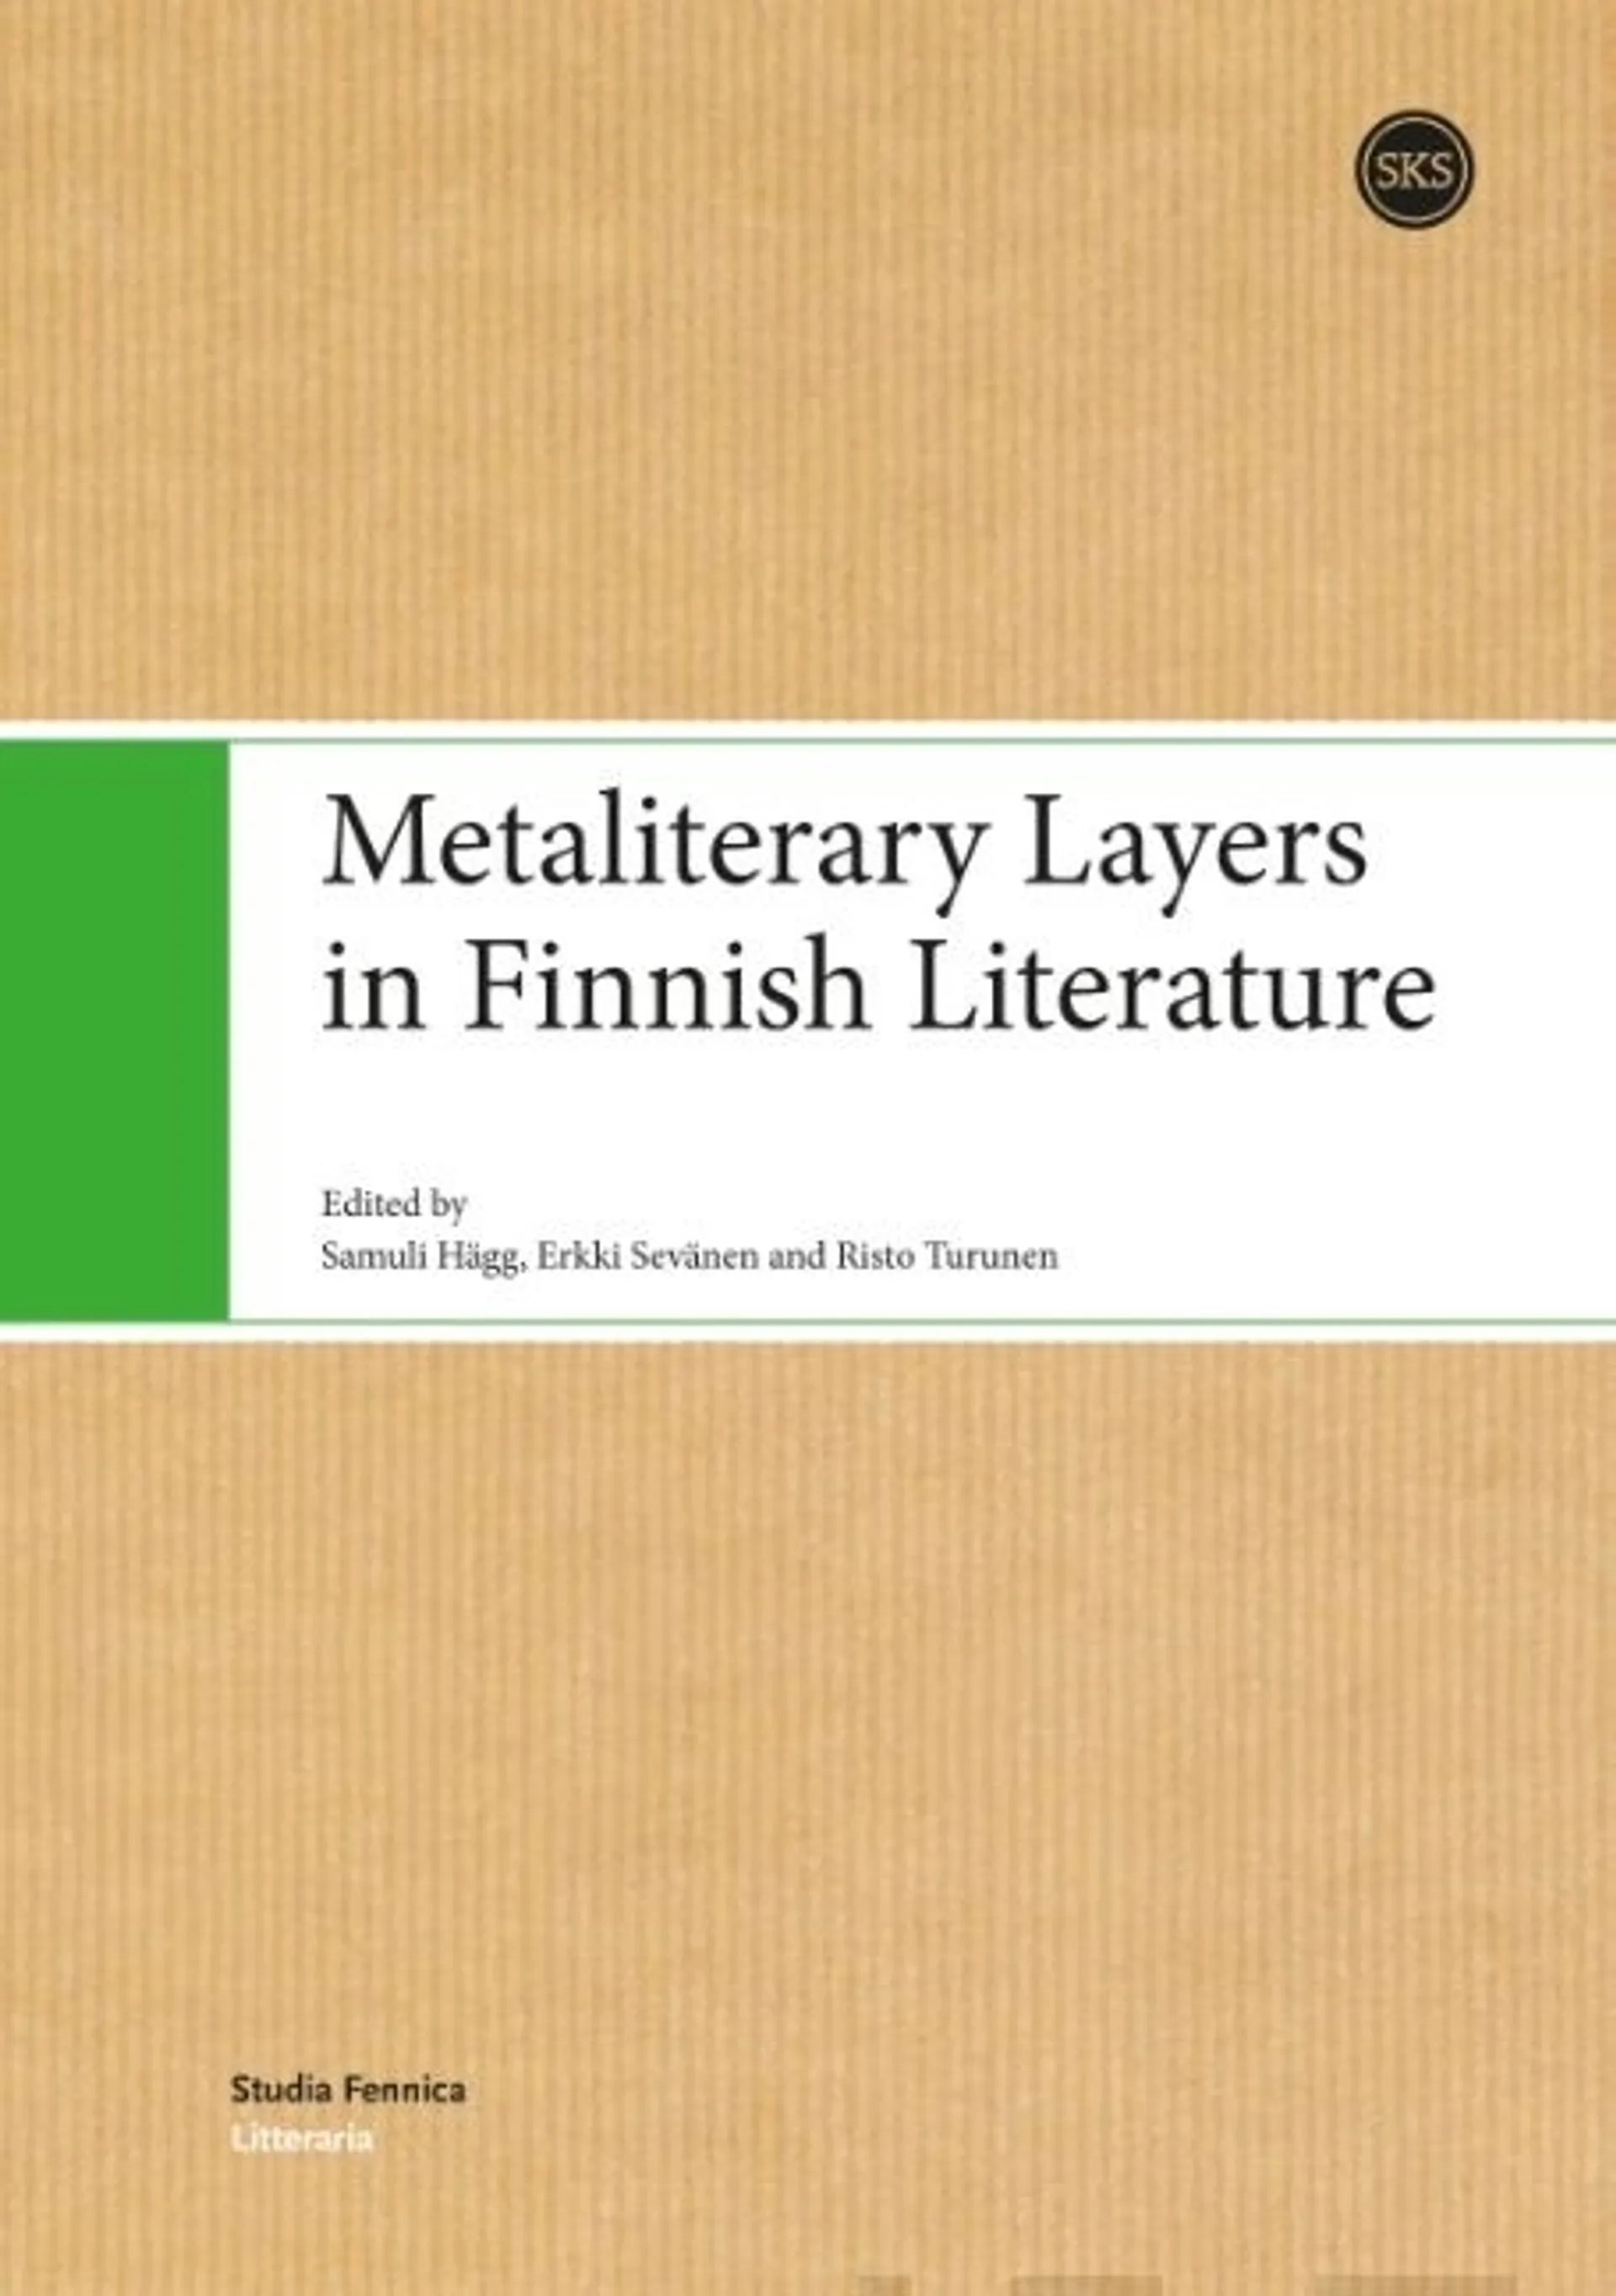 Hägg, Metaliterary Layers in Finnish Literature